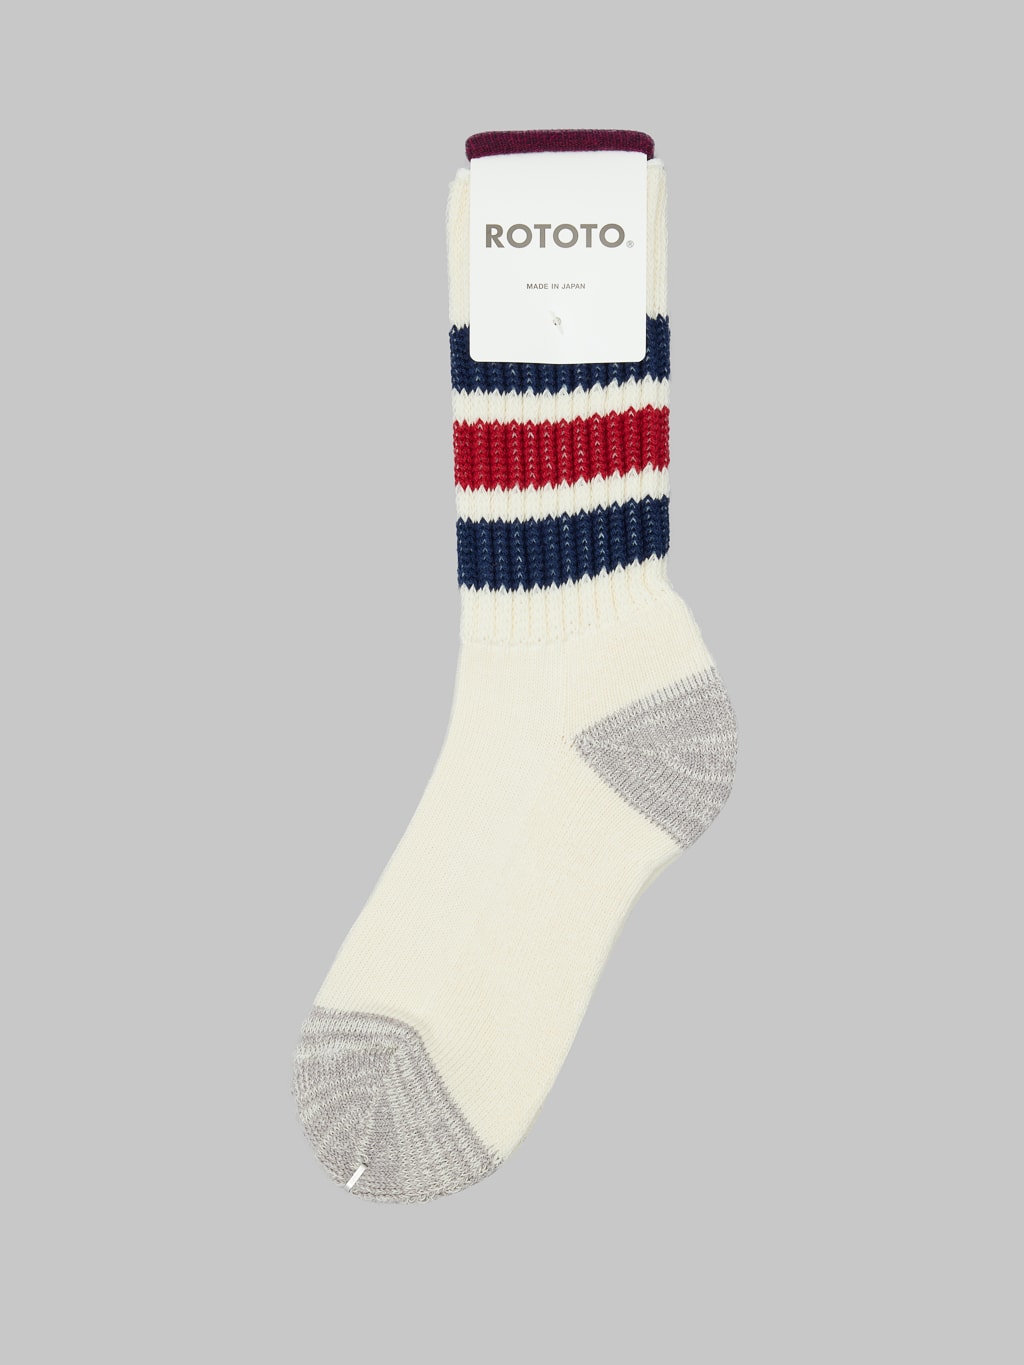 rototo oldschool crew socks navy dark red soft texture